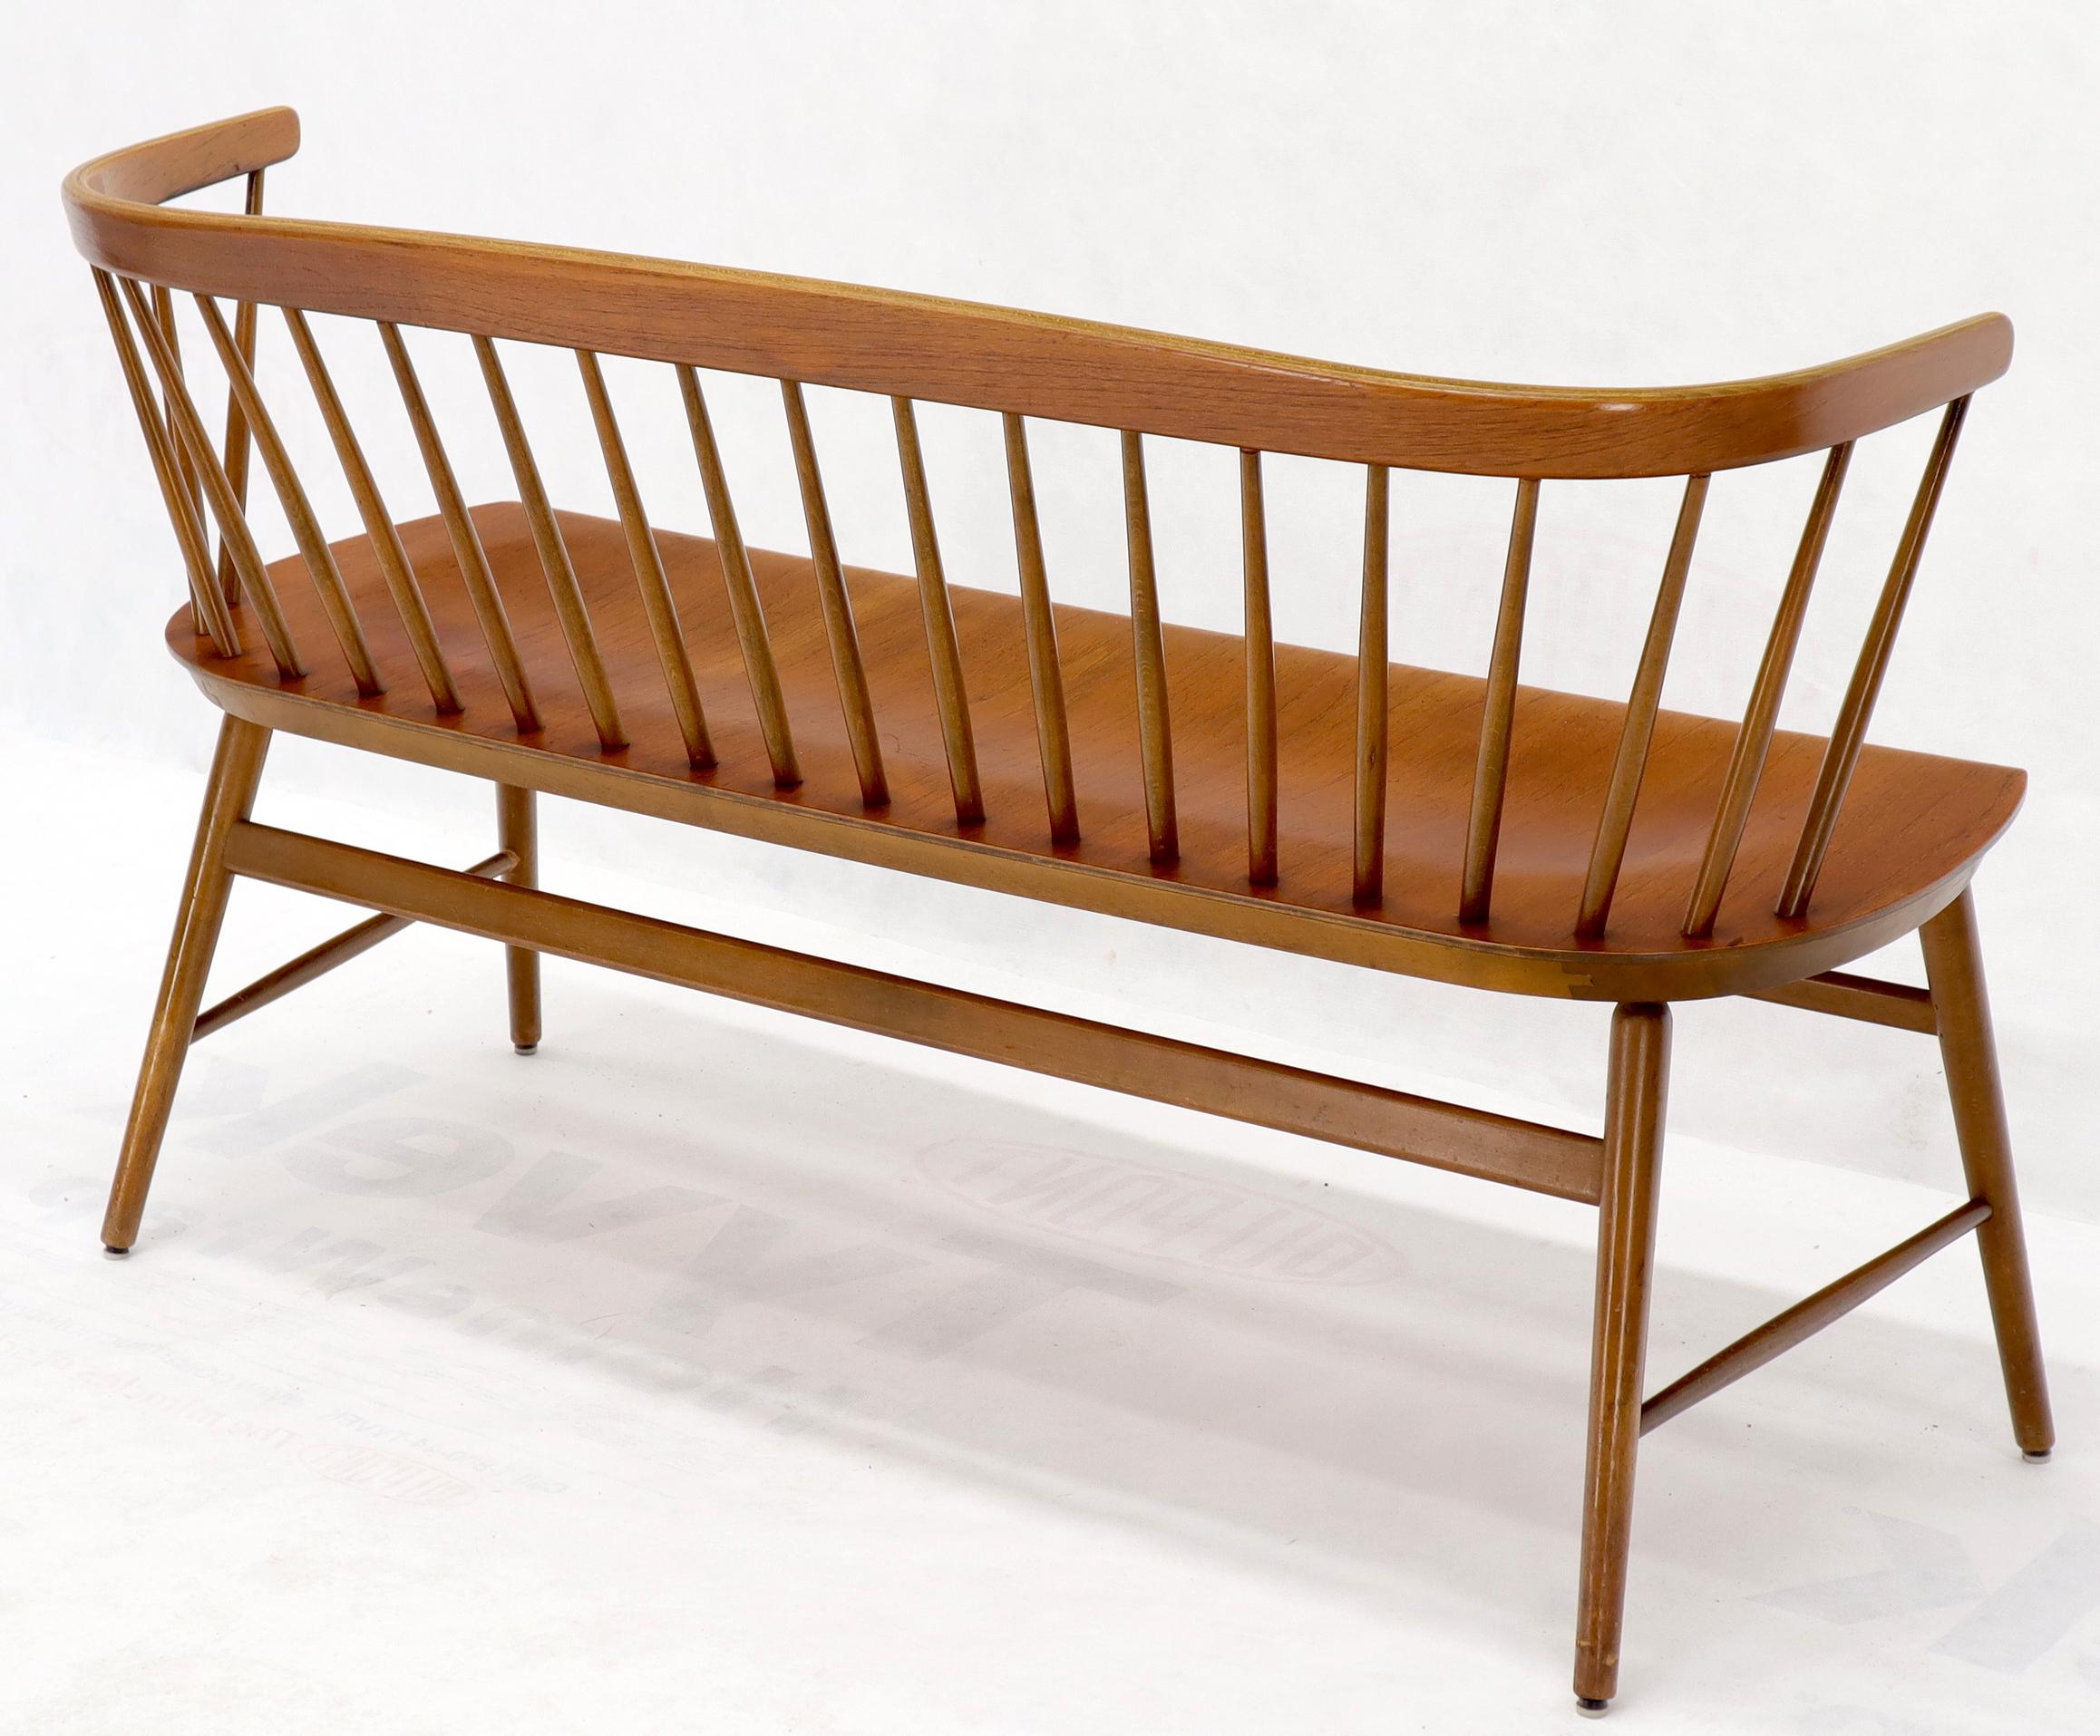 20th Century Danish Mid-Century Modern Molded Teak Plywood Spindle Back Settee Bench